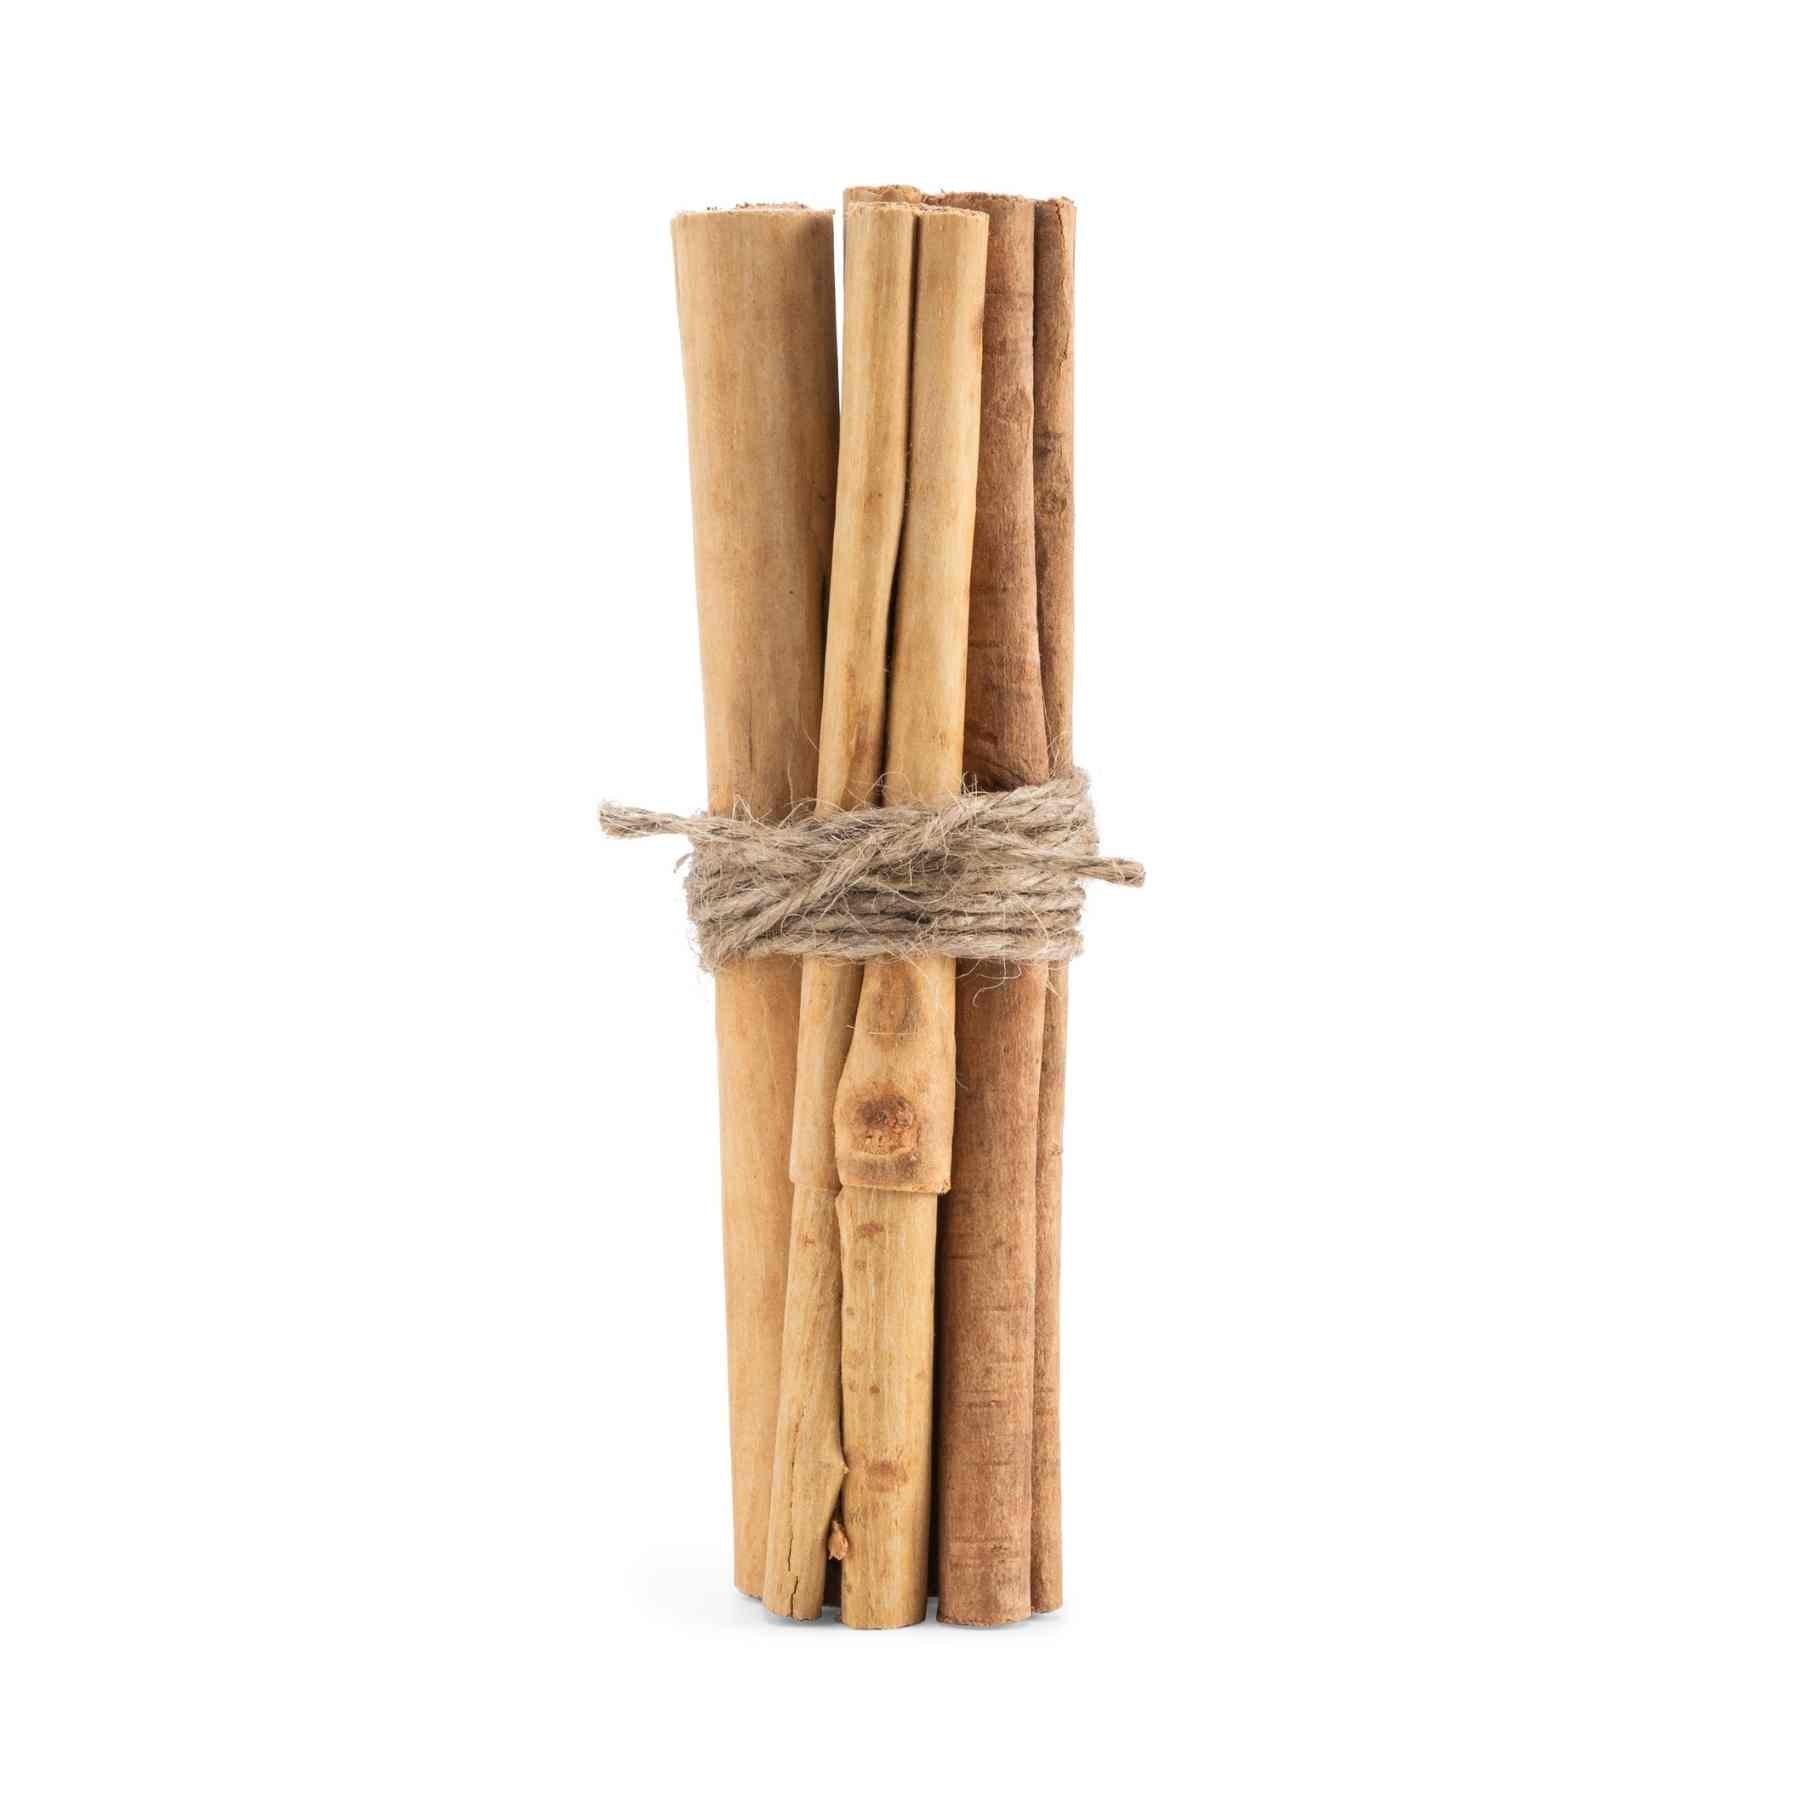 Cannelle de Ceylan bâton Longueur 8cm 100% Naturel Origine Madagascar